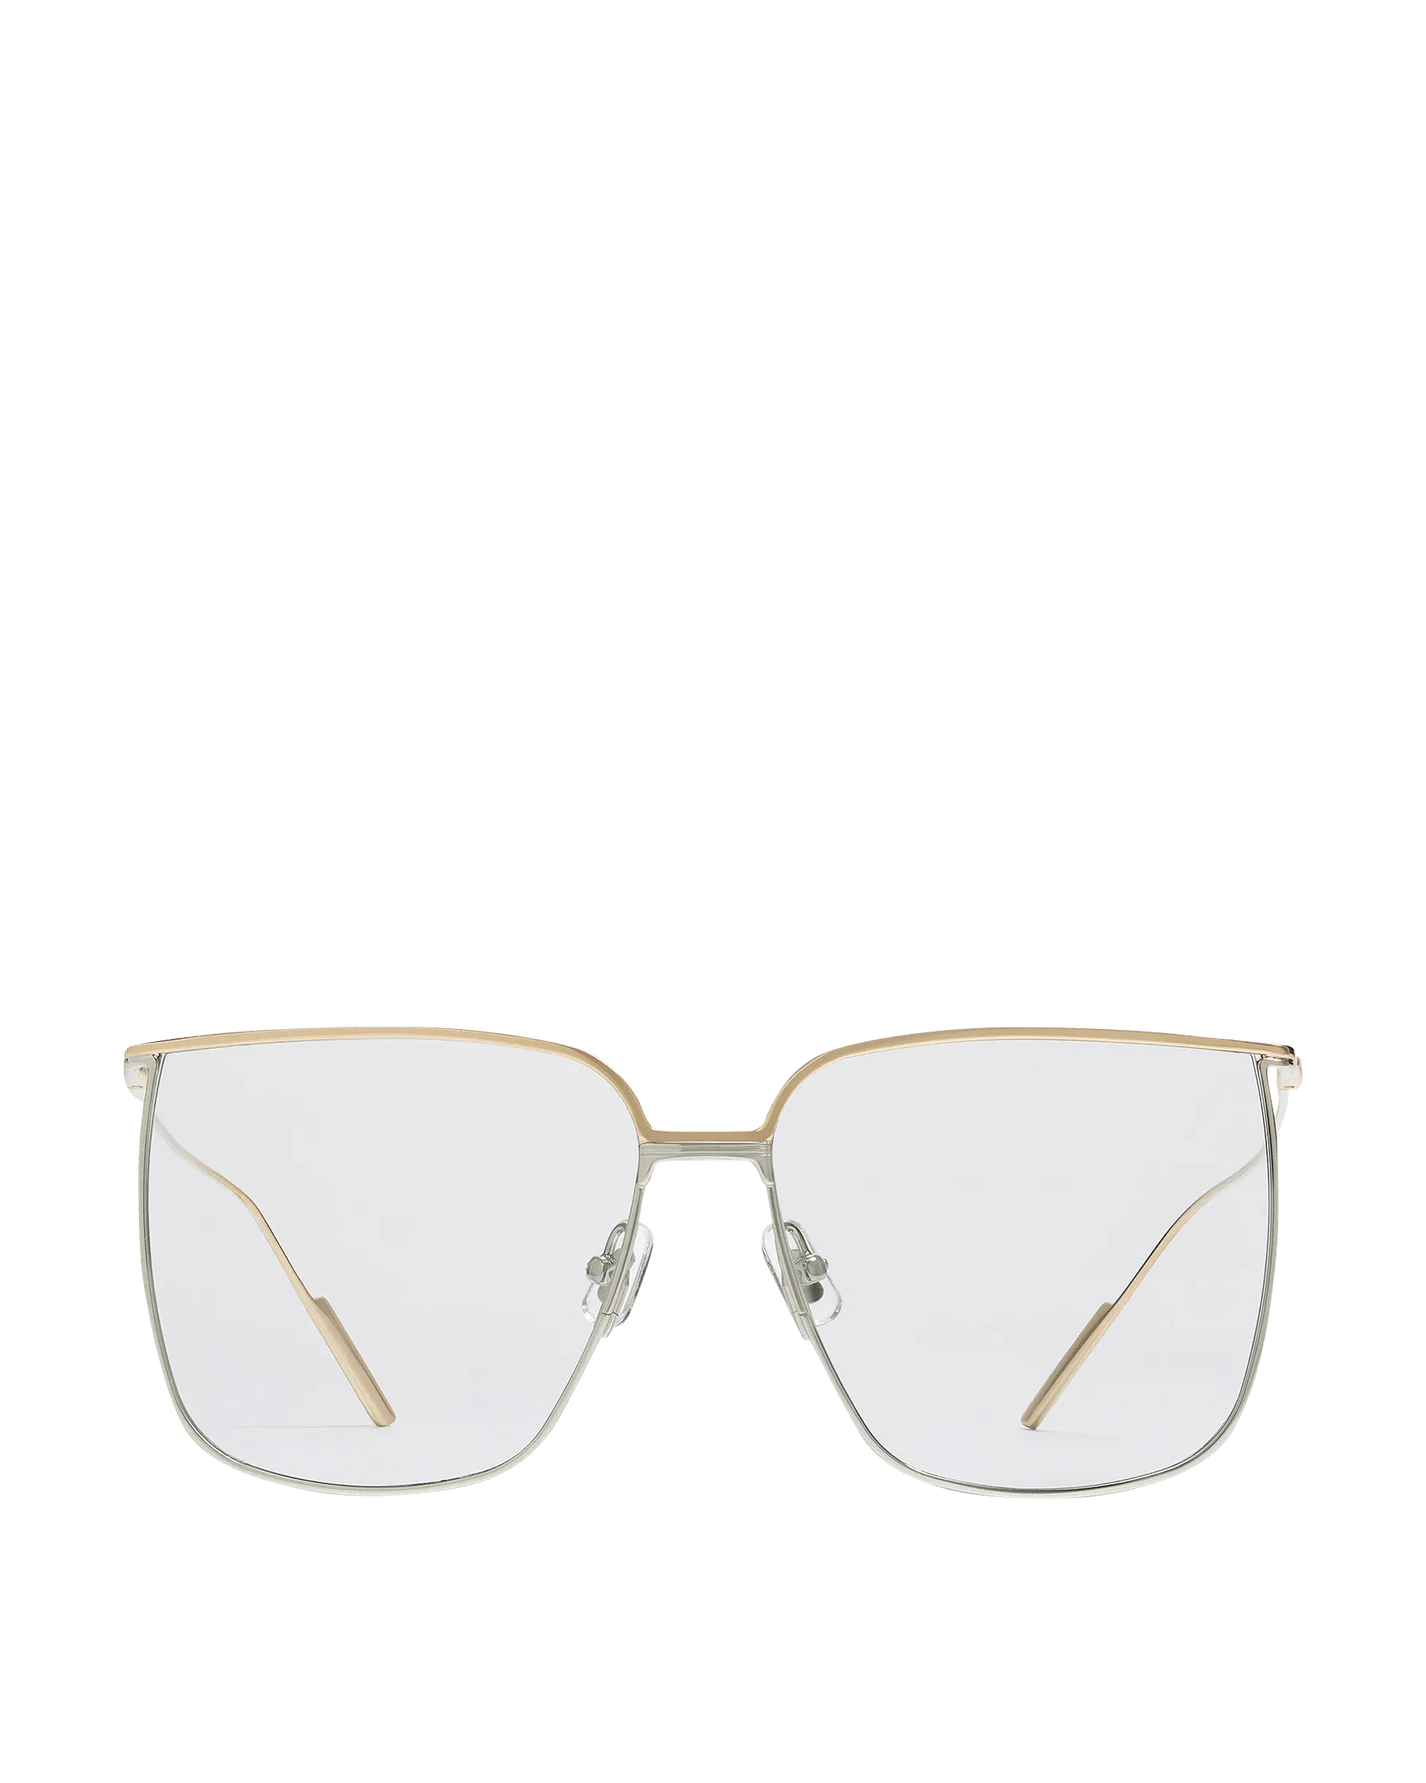 Gentle Monster Hightolow Gold Silver-Blue Eyewear Sunglasses HIGHTOLOW-032 032